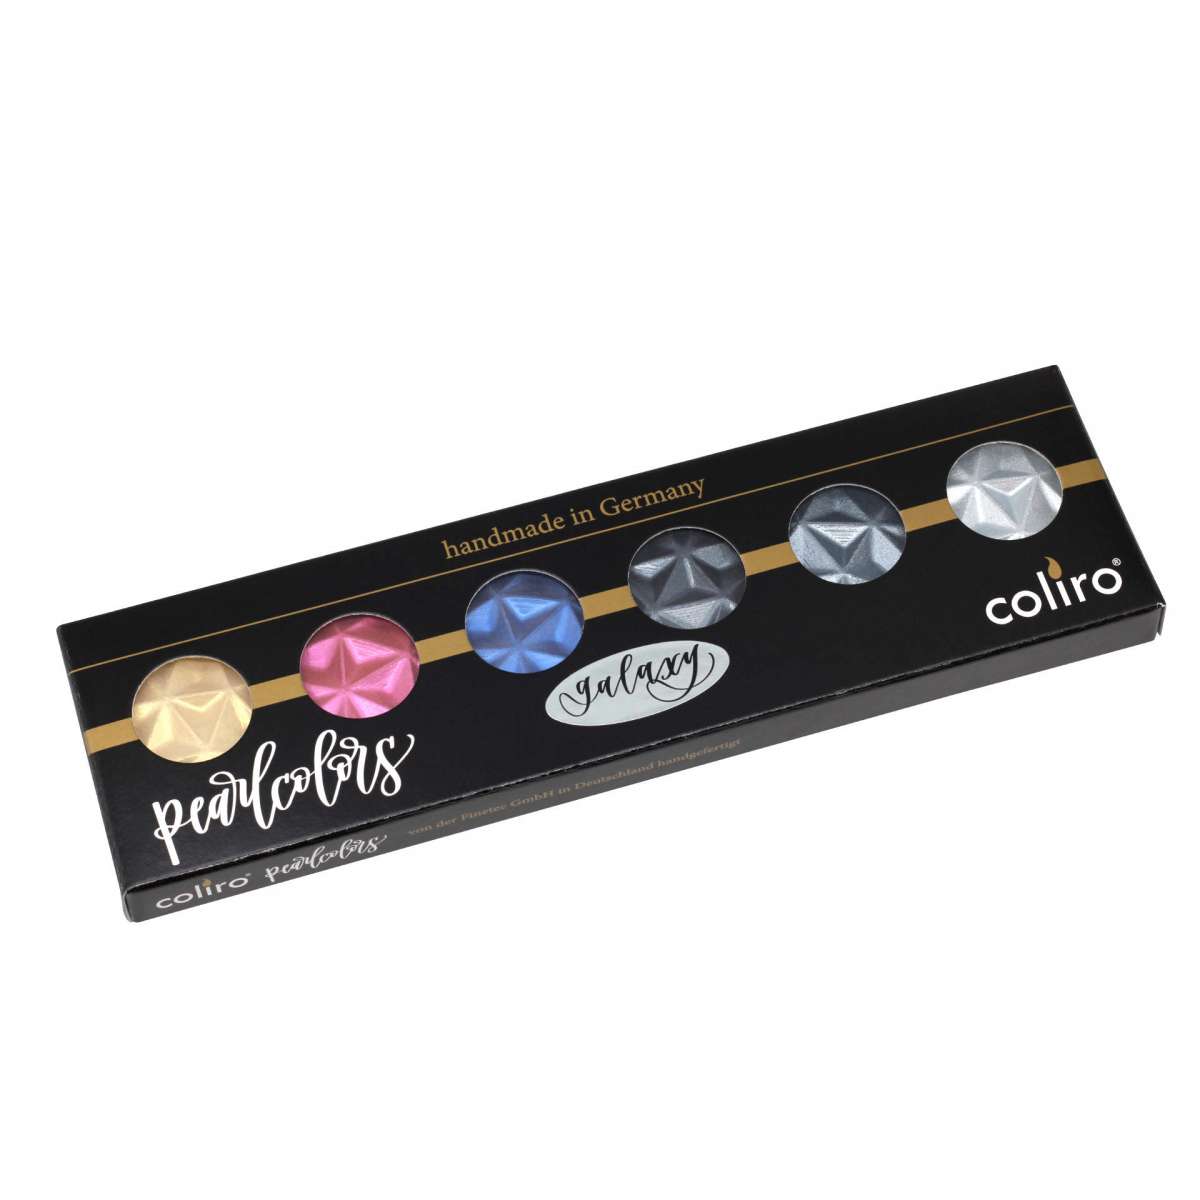 Coliro 'Galaxy' Pearlcolour Set